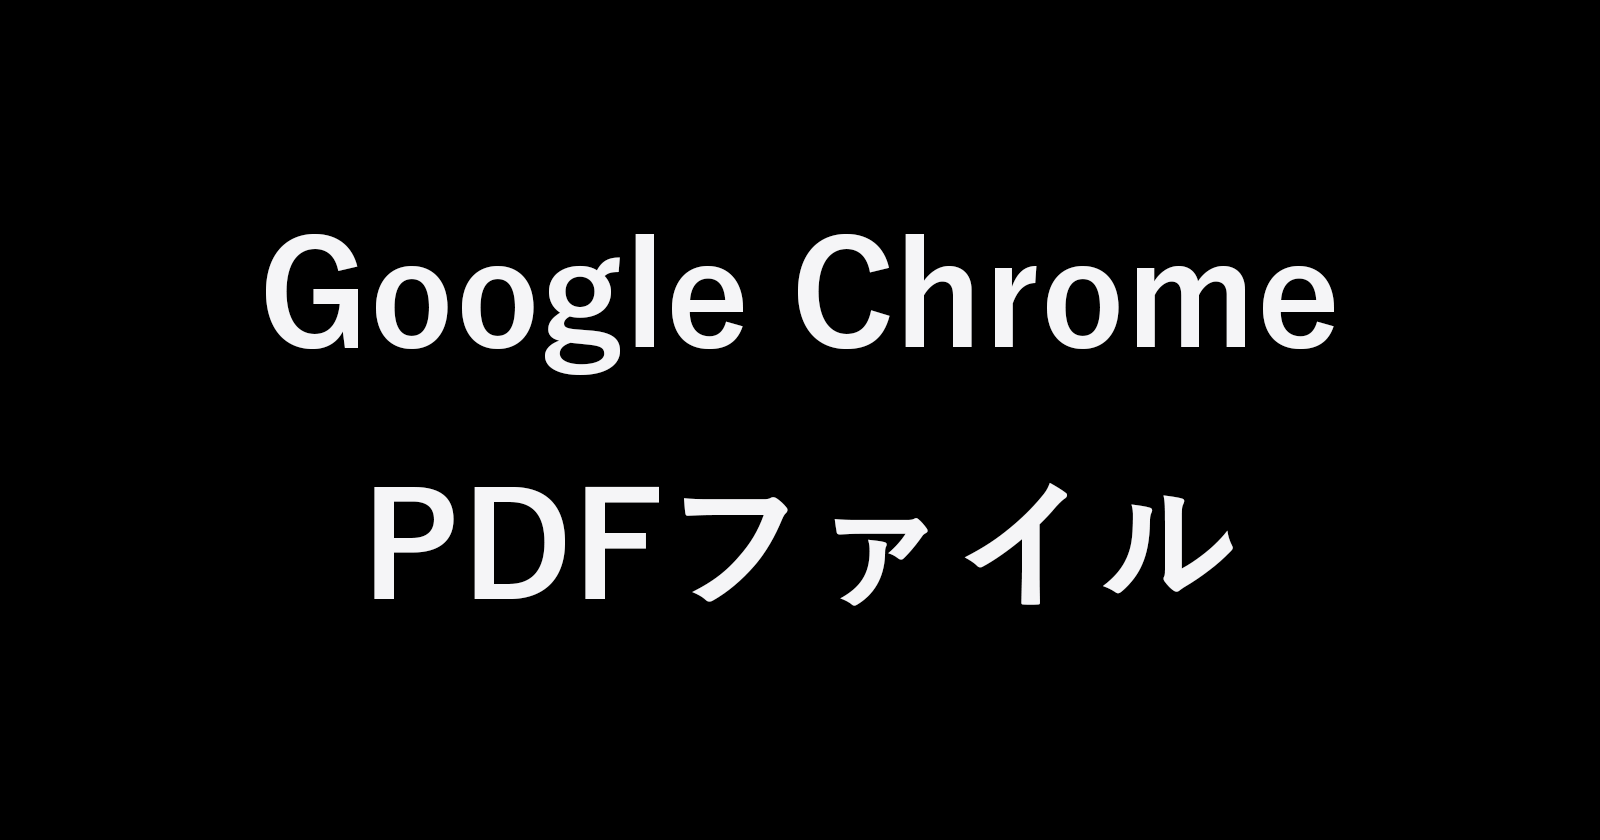 google chrome pdf files